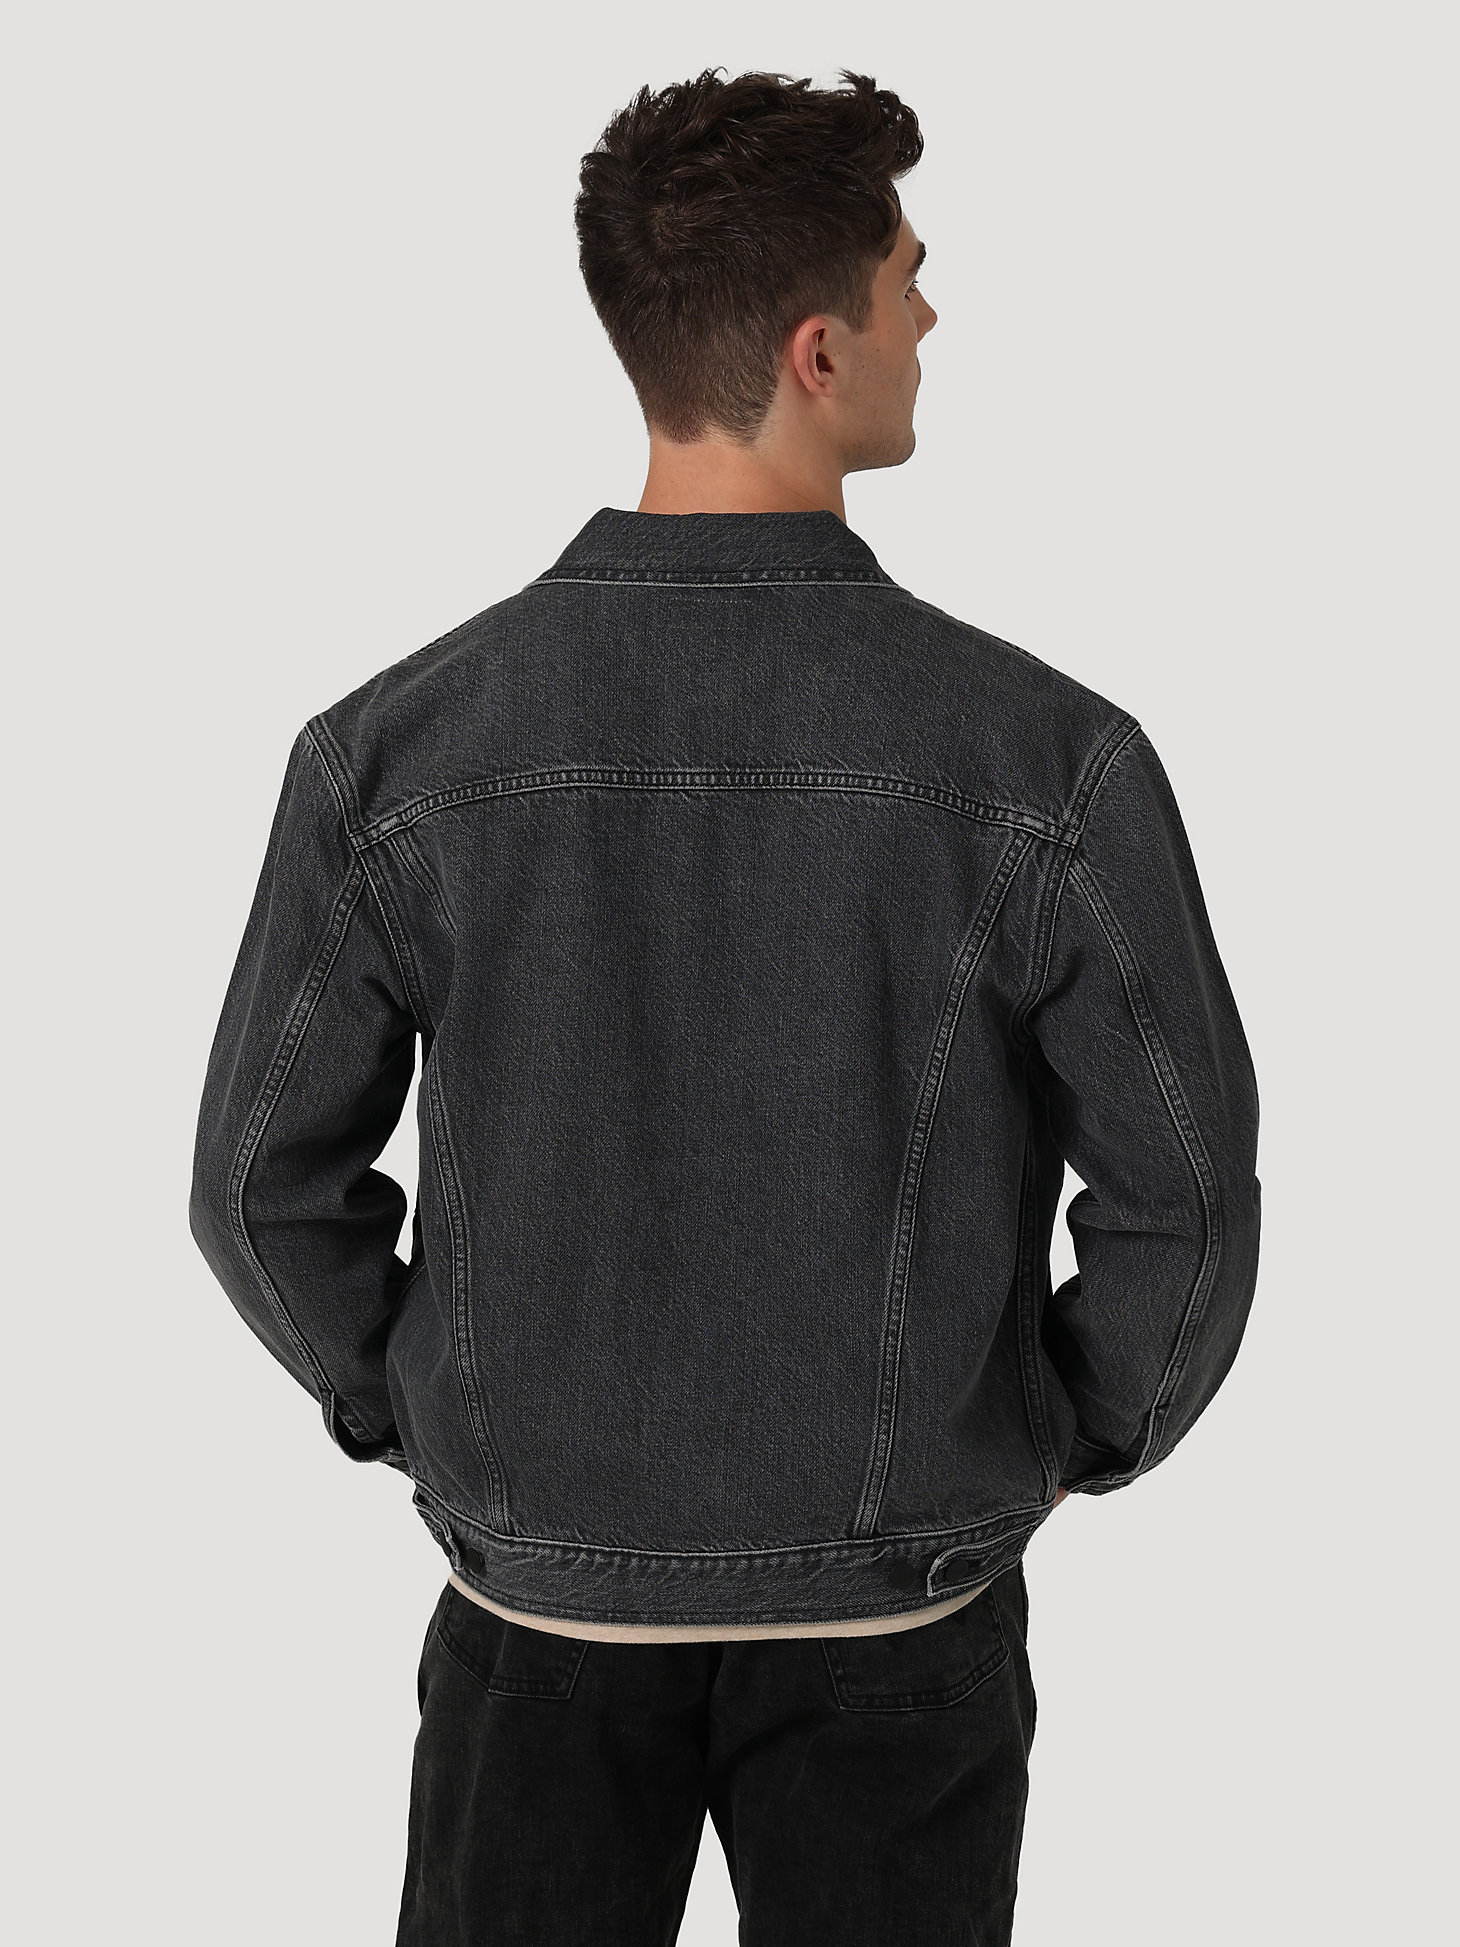 Men's Unlined Denim Jacket in Black Stone Wash alternative view 1